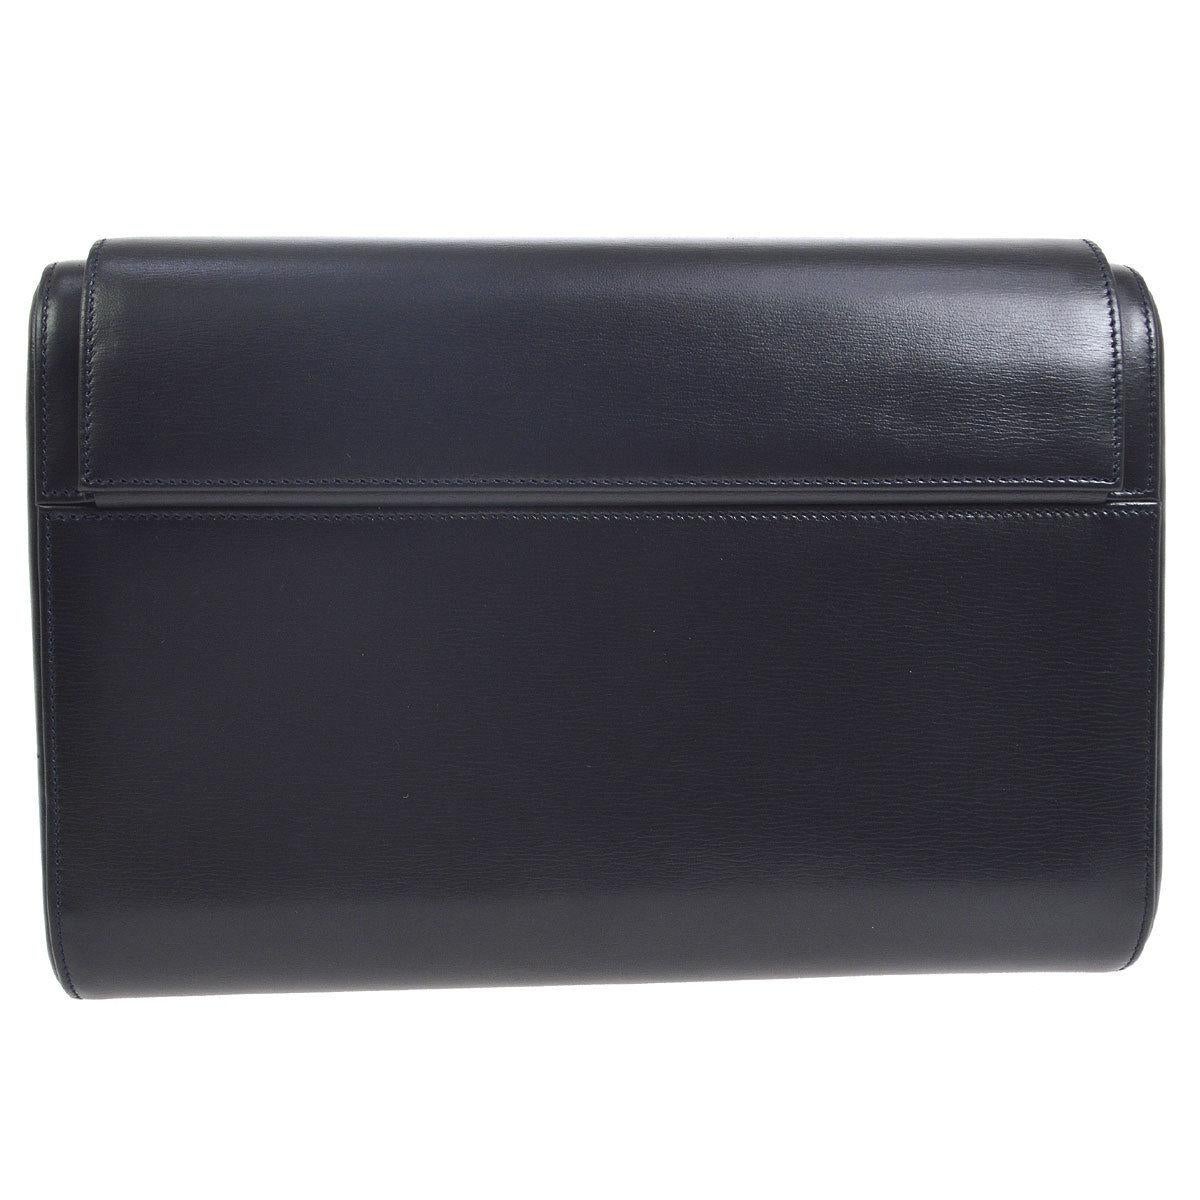 Black Cartier Dark Midnight Blue Leather Gold Emblem Envelope Evening Clutch Flap Bag